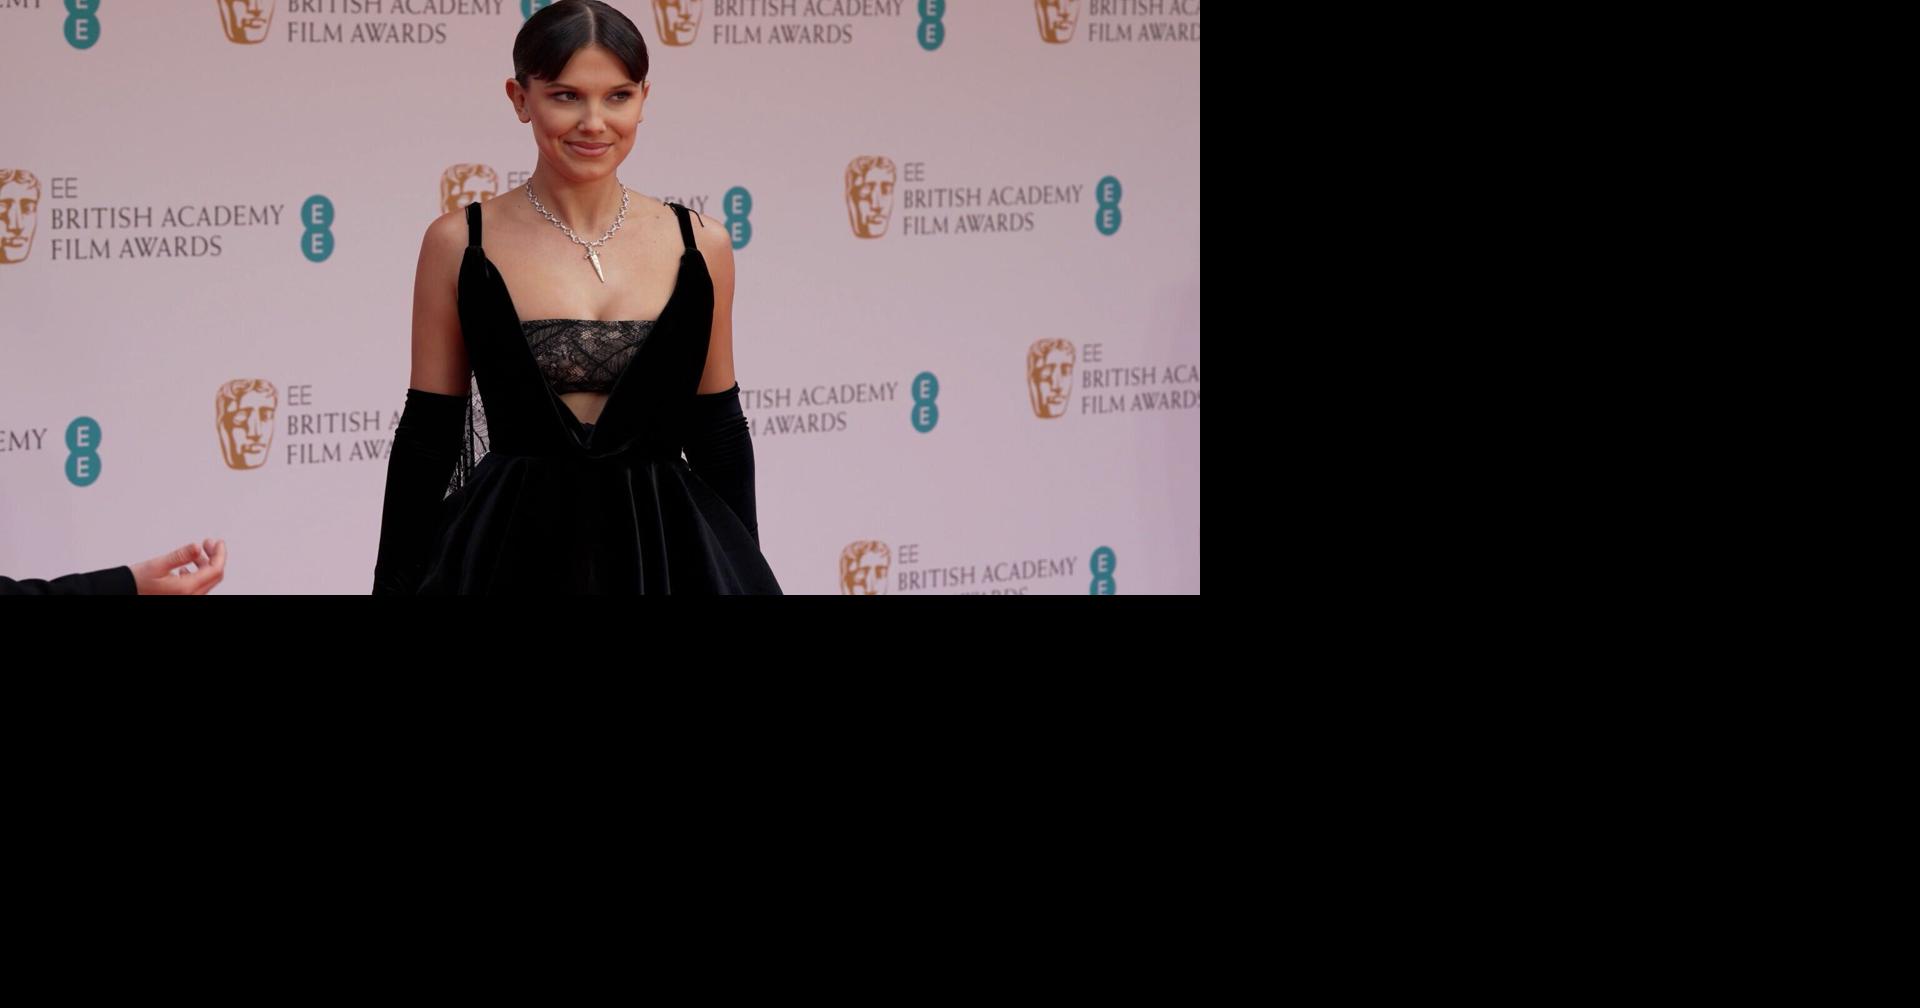 Millie Bobby Brown at the BAFTA Awards: Photos